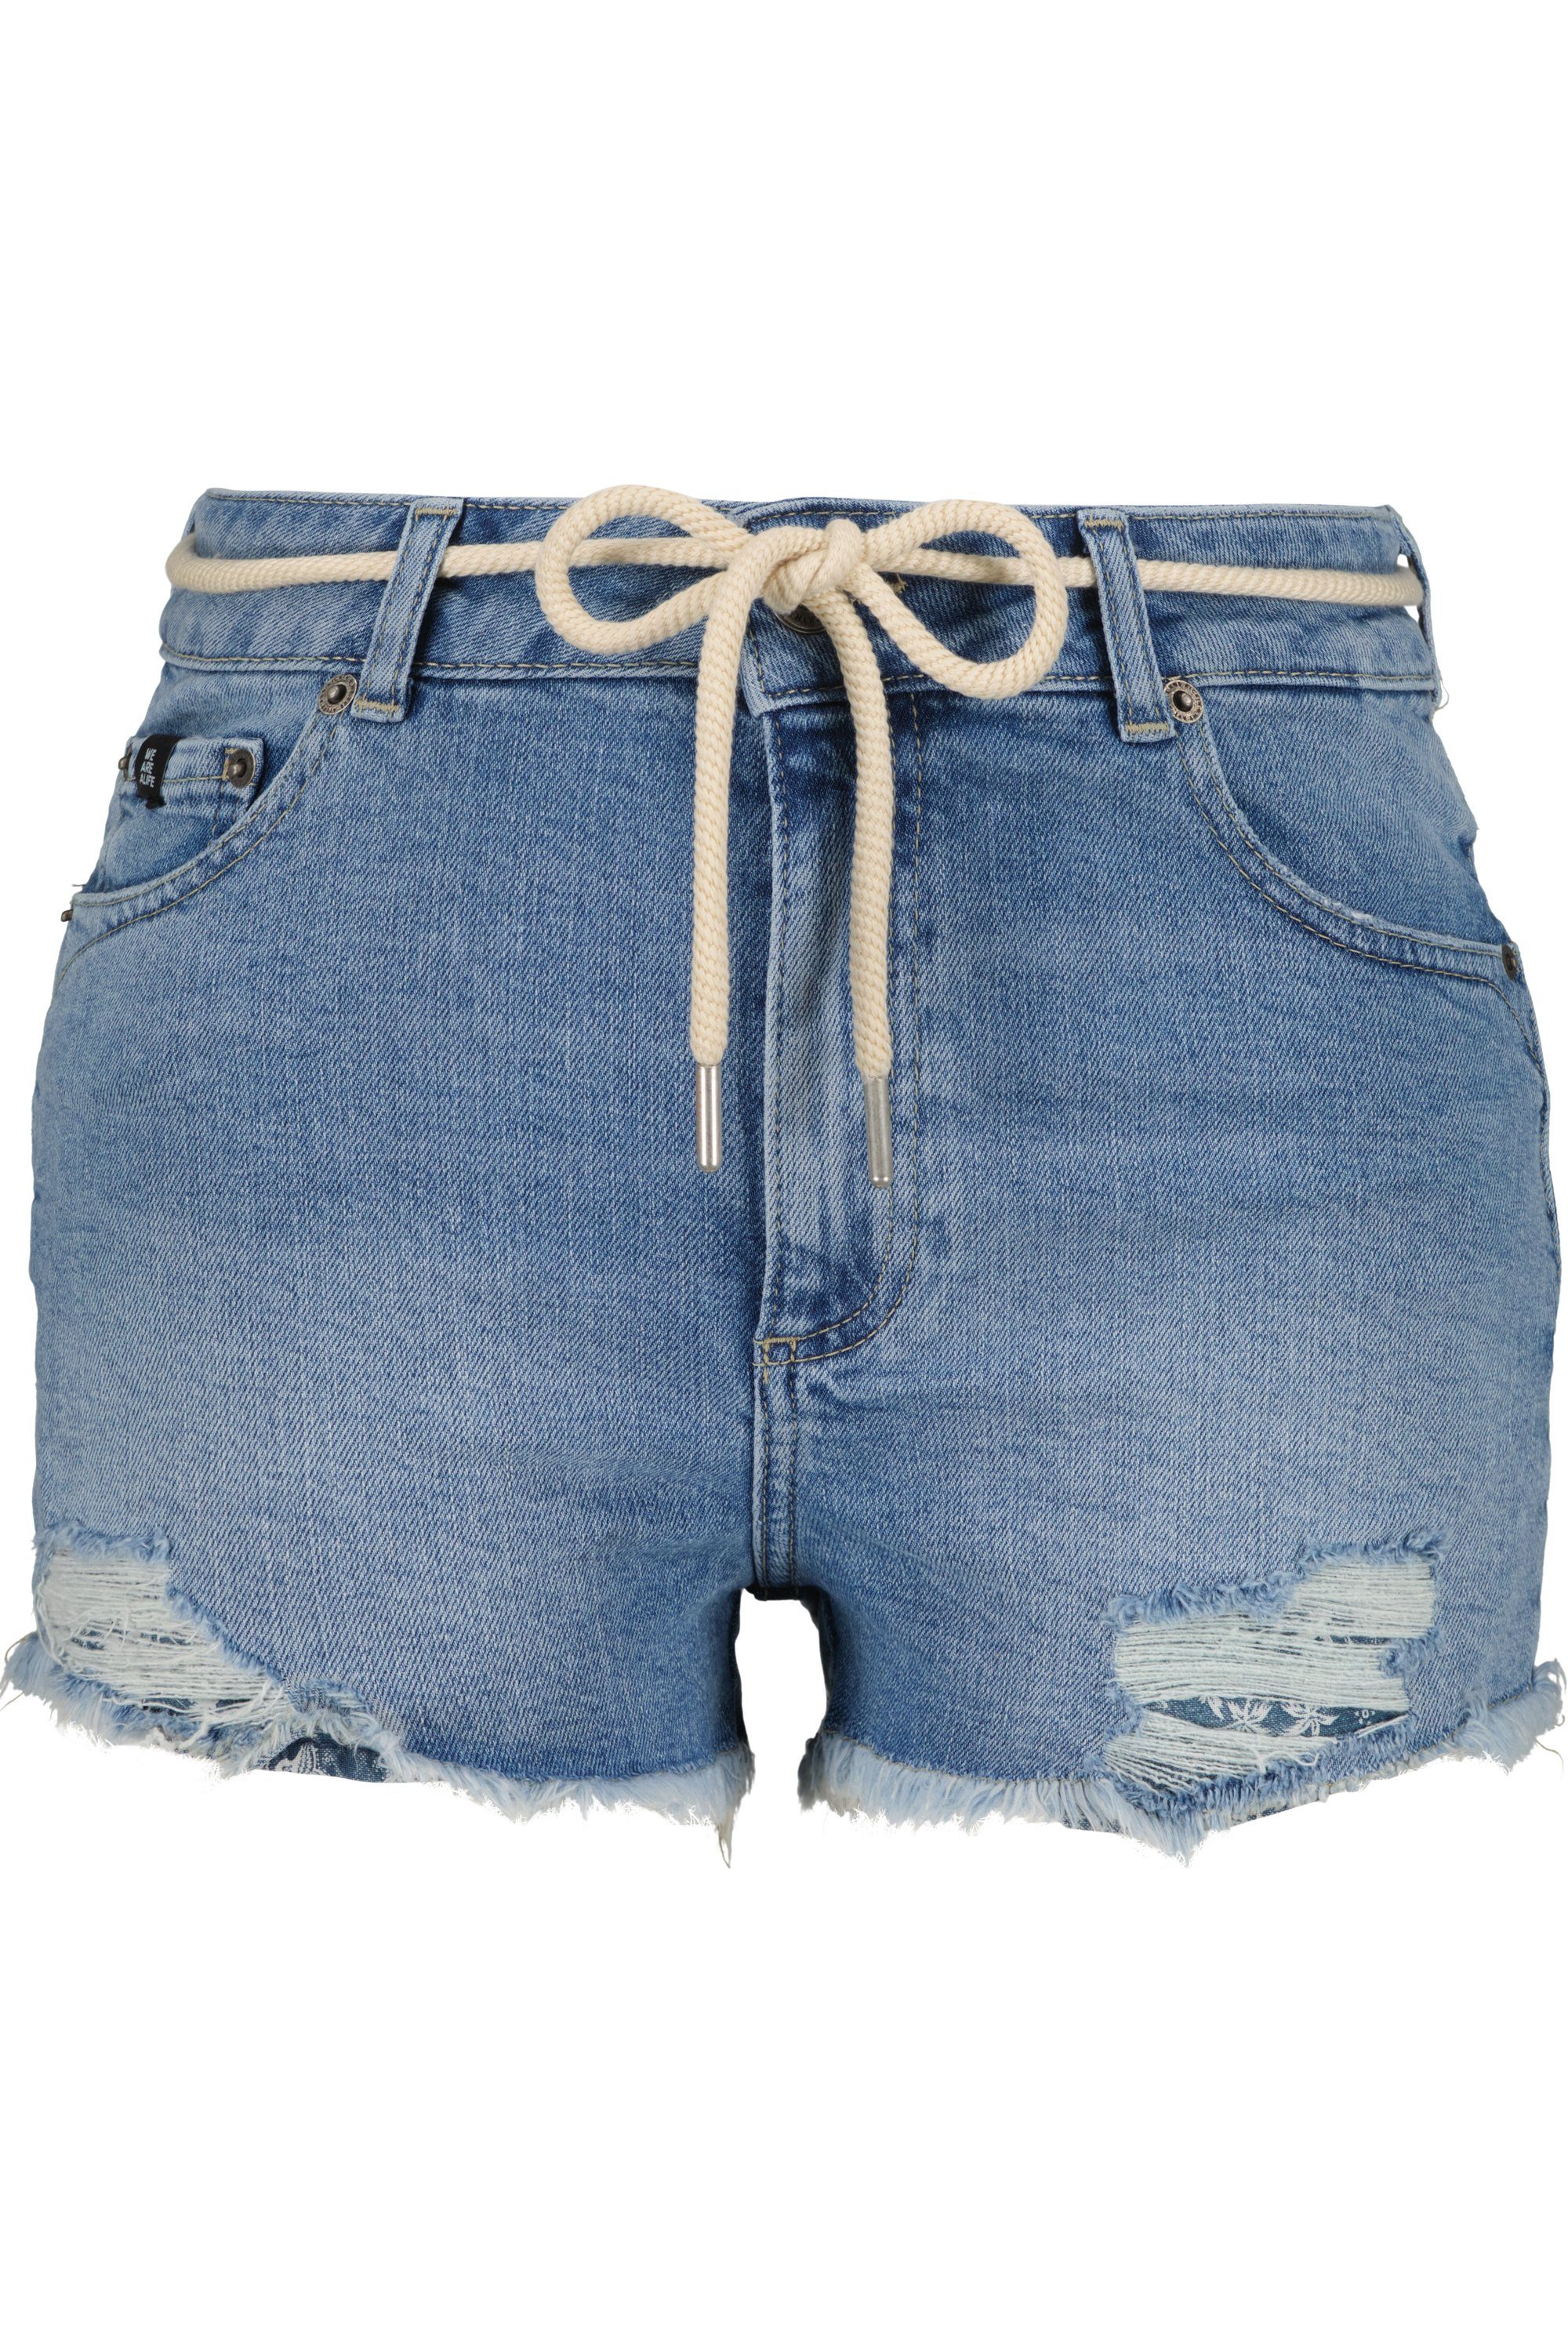 Alife & Kickin Shorts washed light LatoyaAK Damen denim Jeansshorts, A kurze DNM Hose Shorts